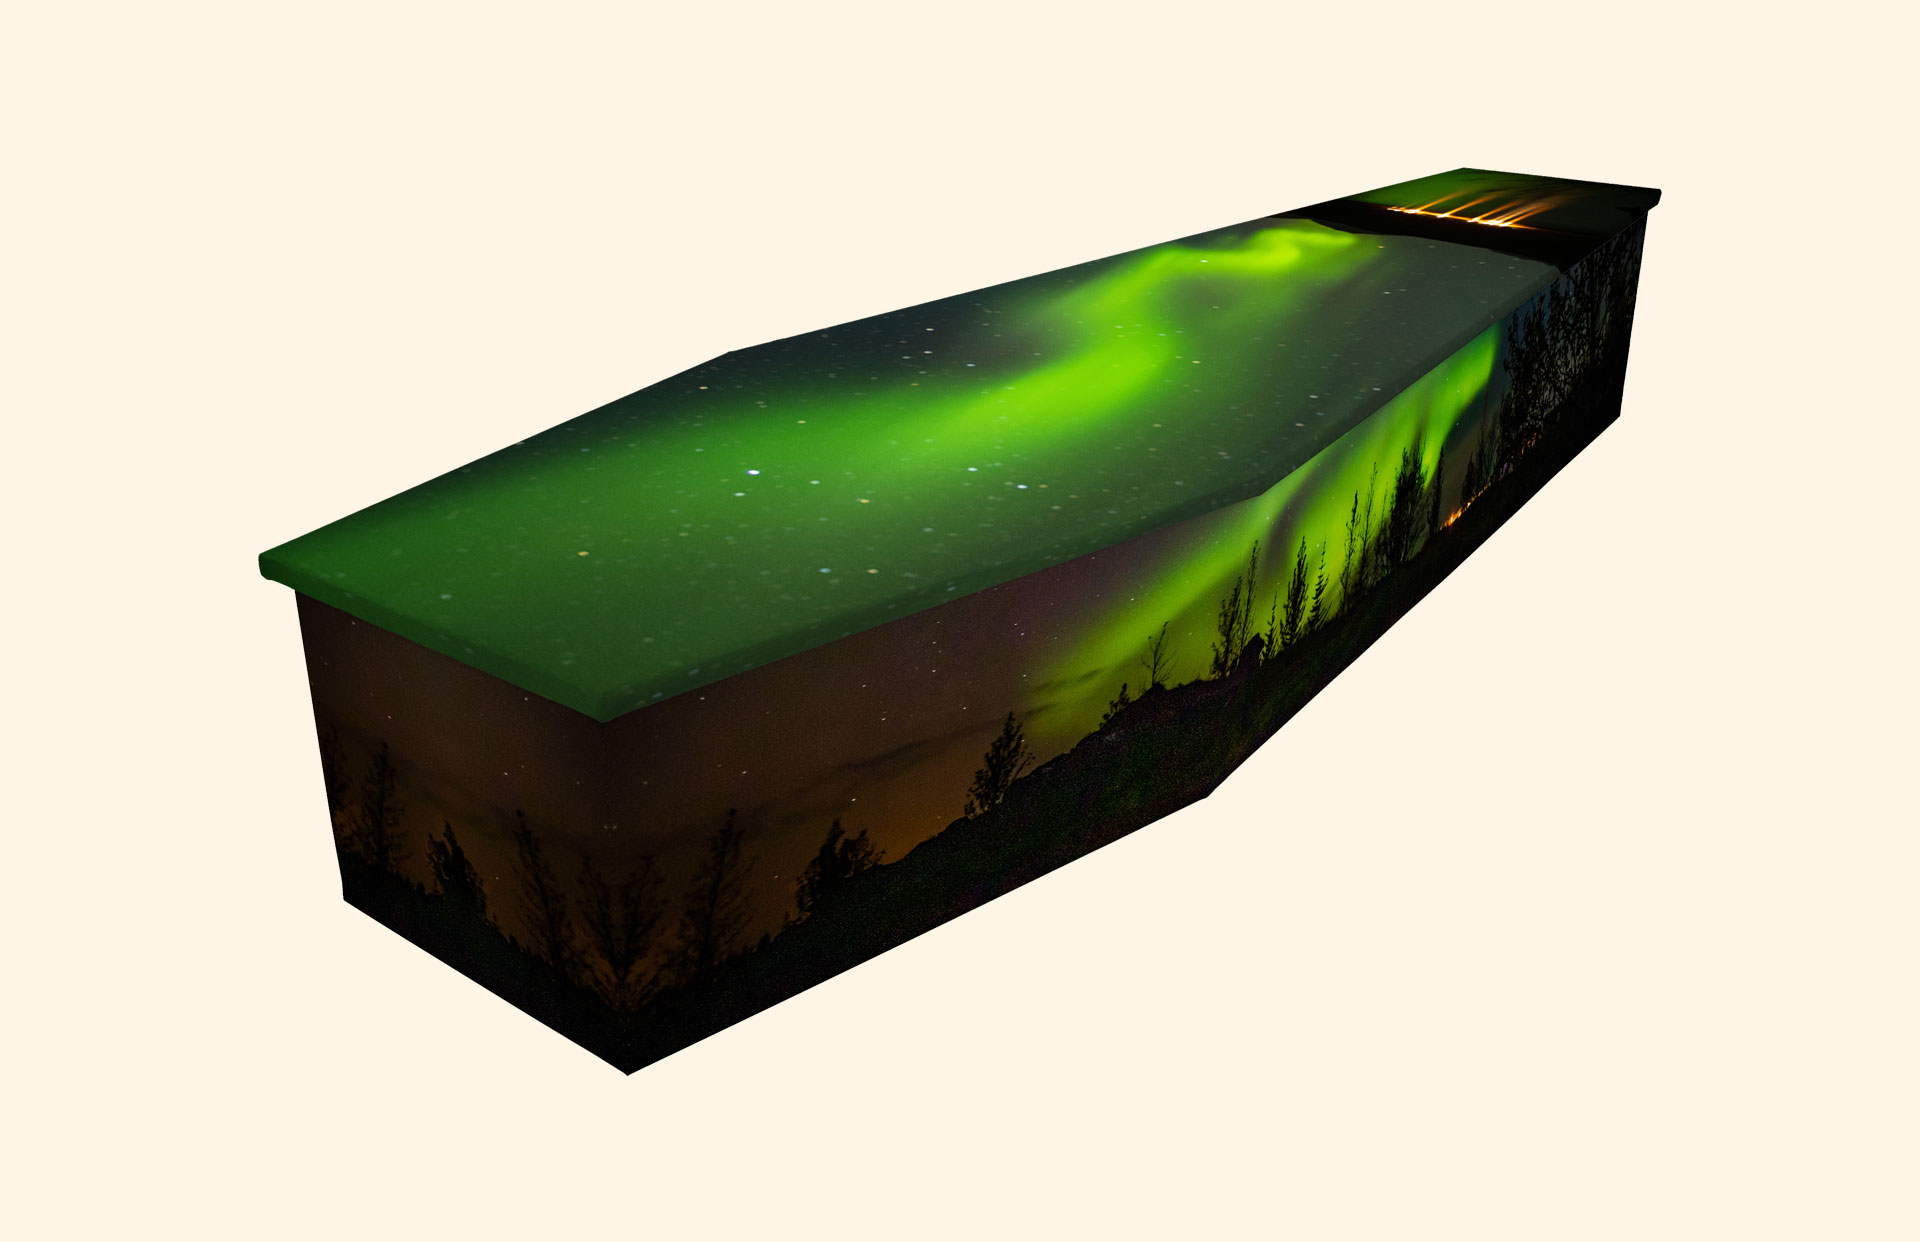 Northern Lights design on a cardboard coffin